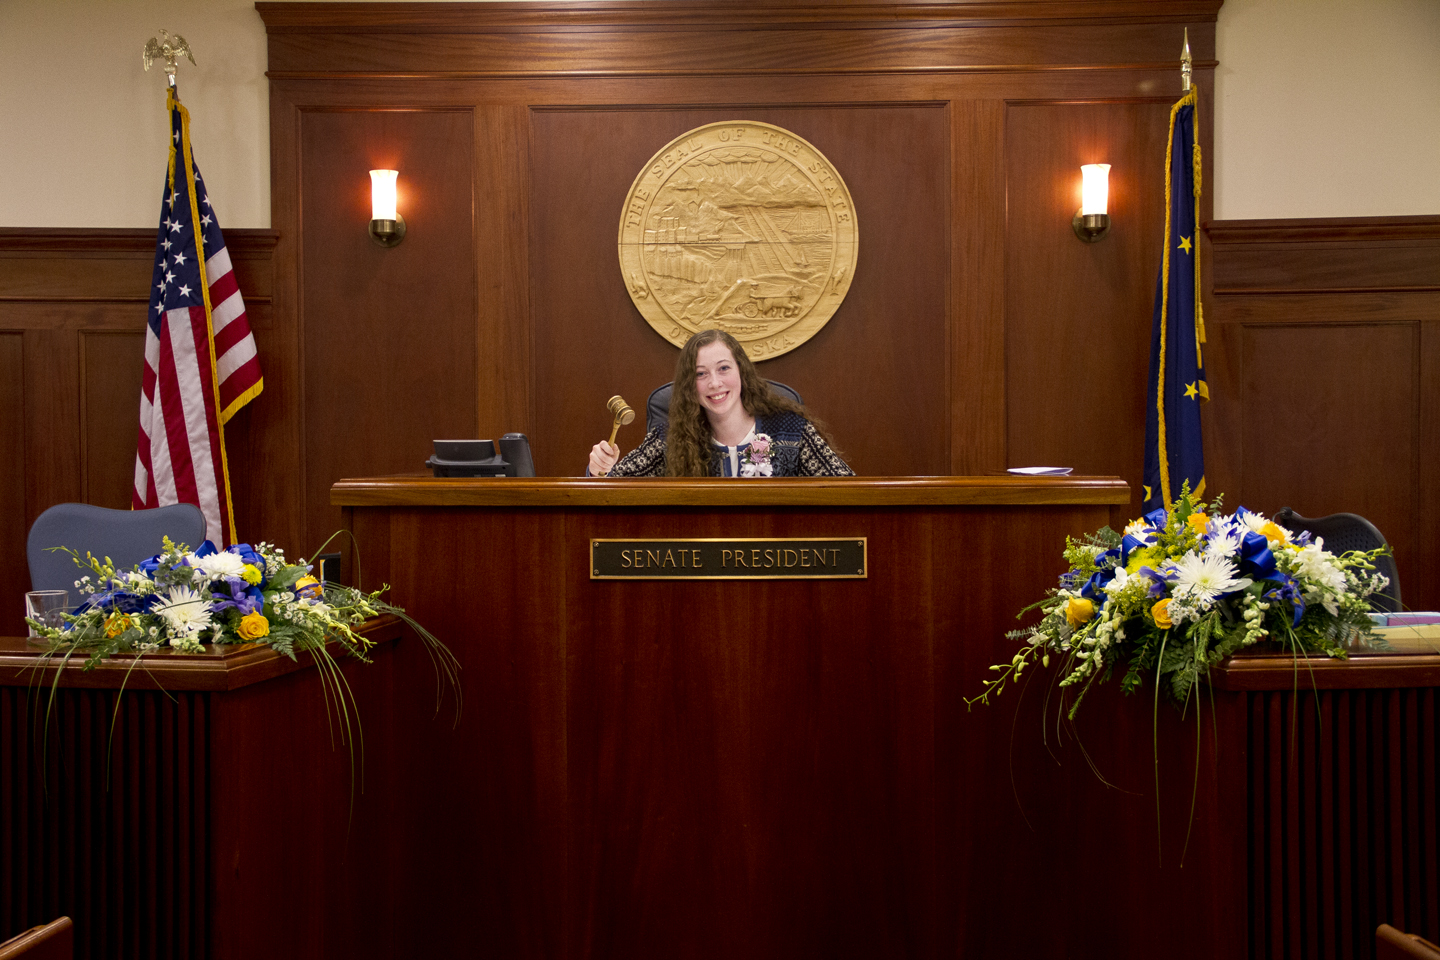 Sen. Stedman\'s daughter Susie poses in the Senate President\'s chair